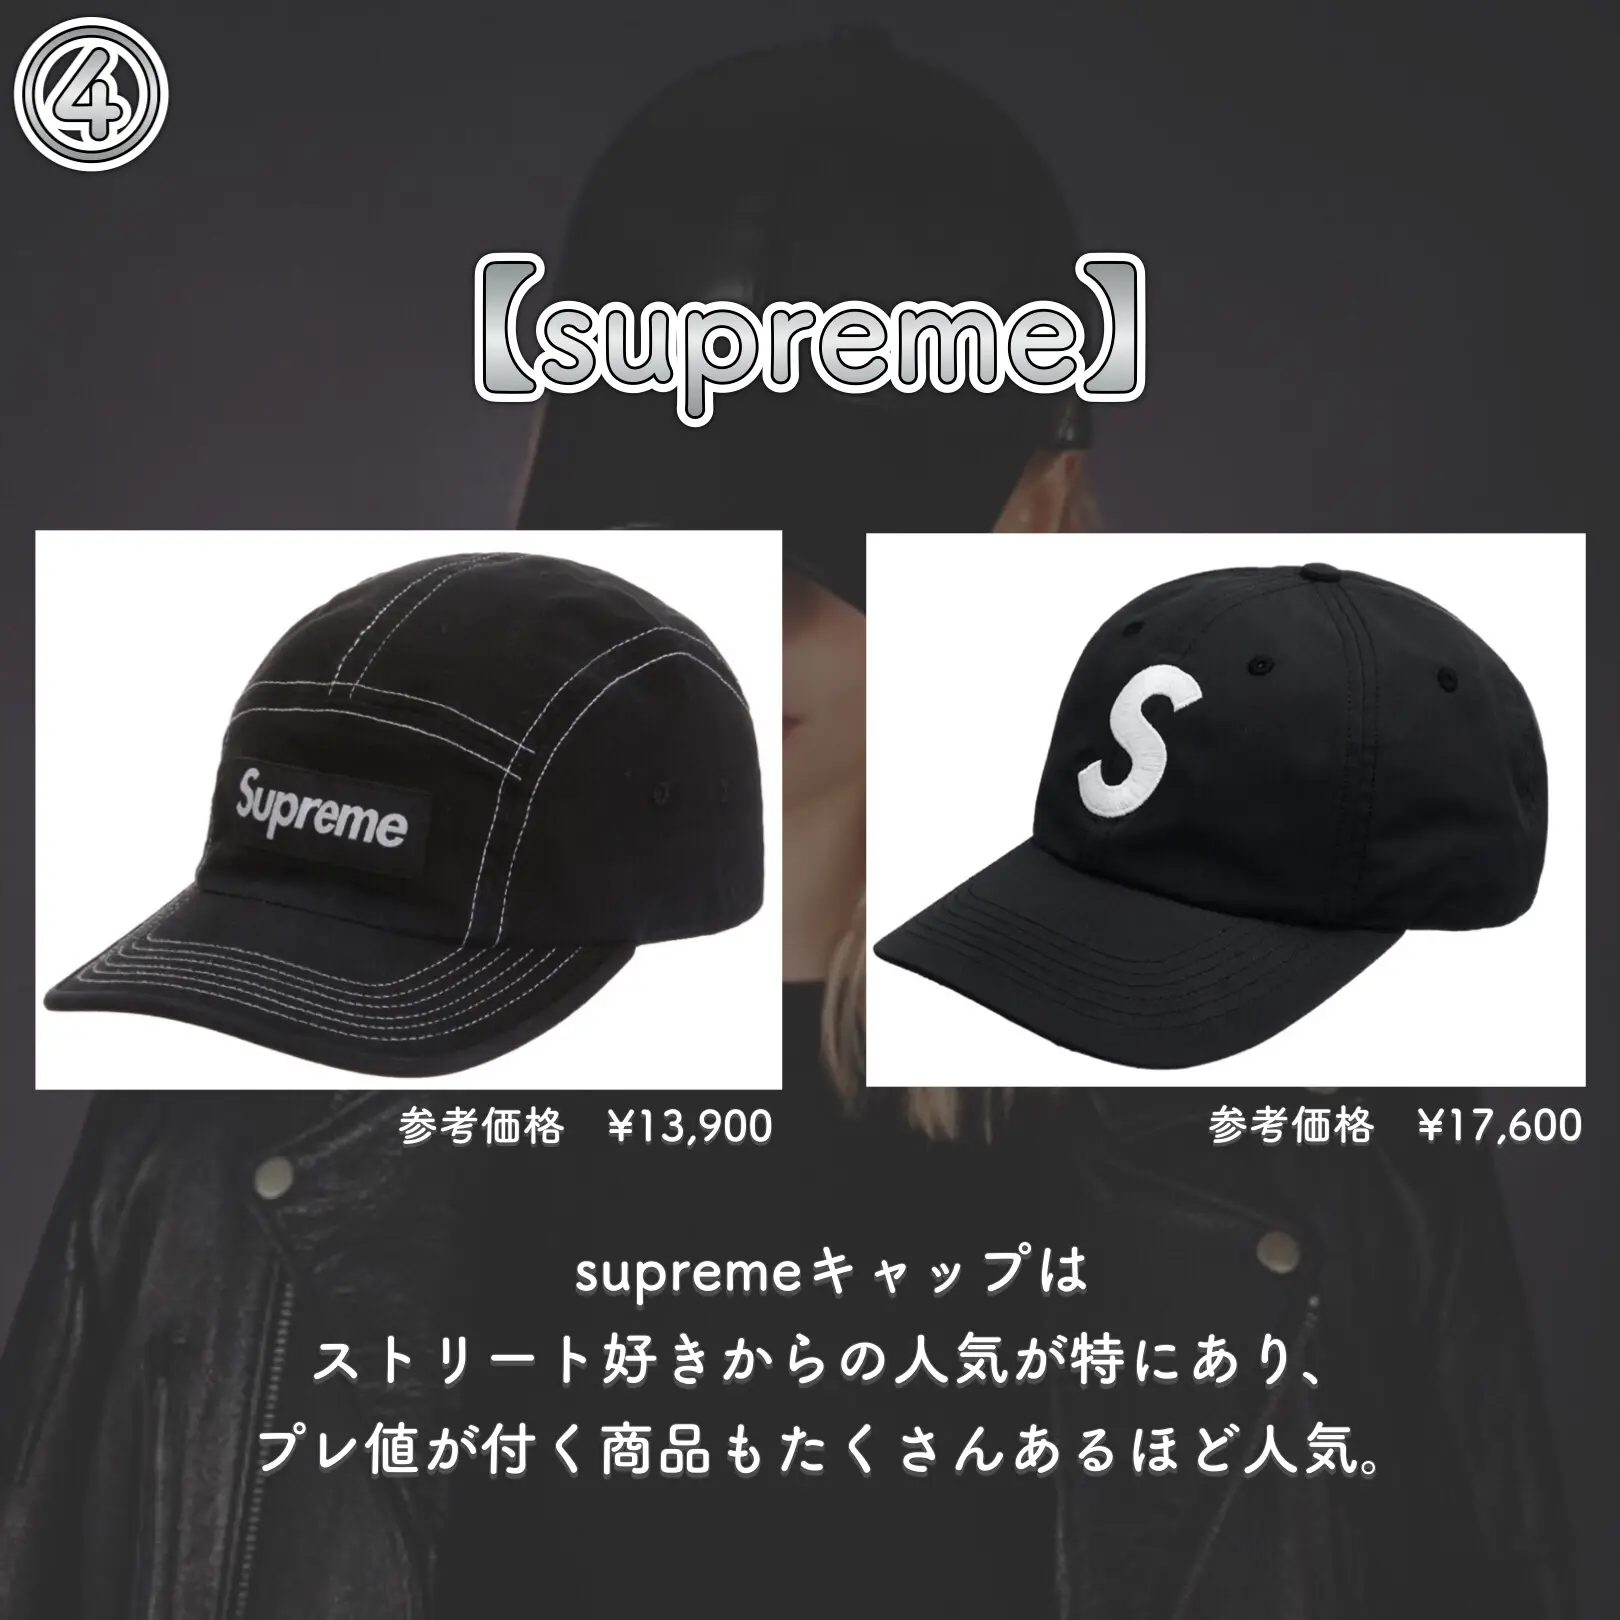 supreme Tee 衣類 雑貨 キャップ set まとめ売りShop姫